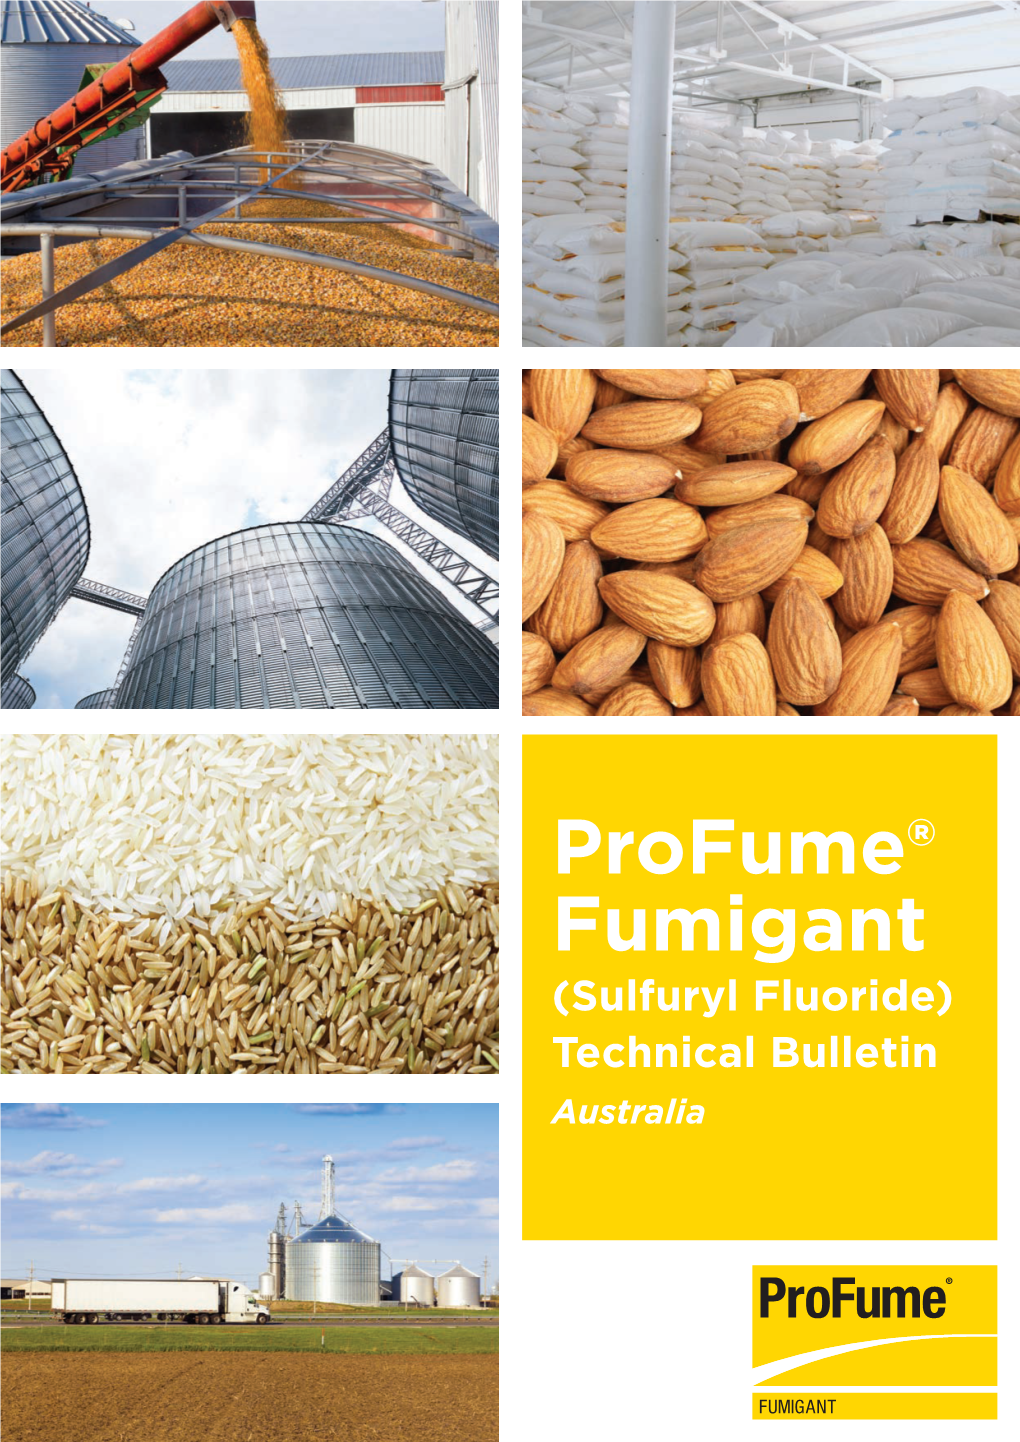 Profume® Fumigant (Sulfuryl Fluoride) Technical Bulletin Australia PROFUME® FUMIGANT (SULFURYL FLUORIDE) TECHNICAL BULLETIN